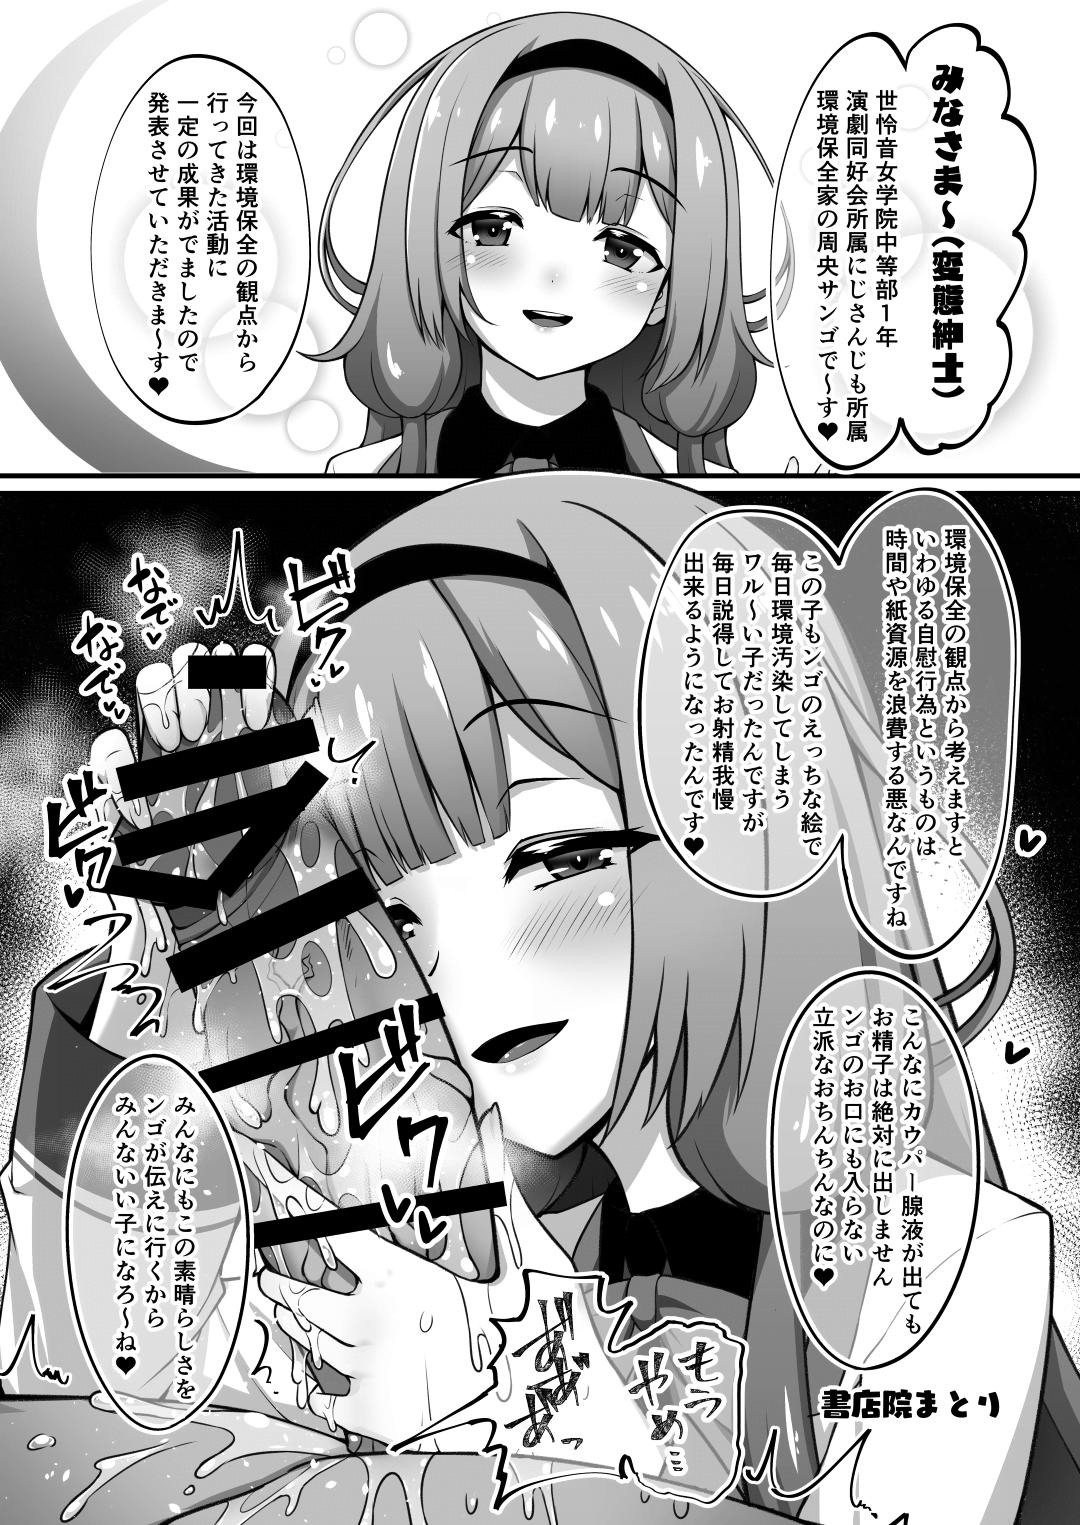 Licking Ippai Shaberu Kimi ga Suki - I love you who talk a lot. - Nijisanji Story - Page 24